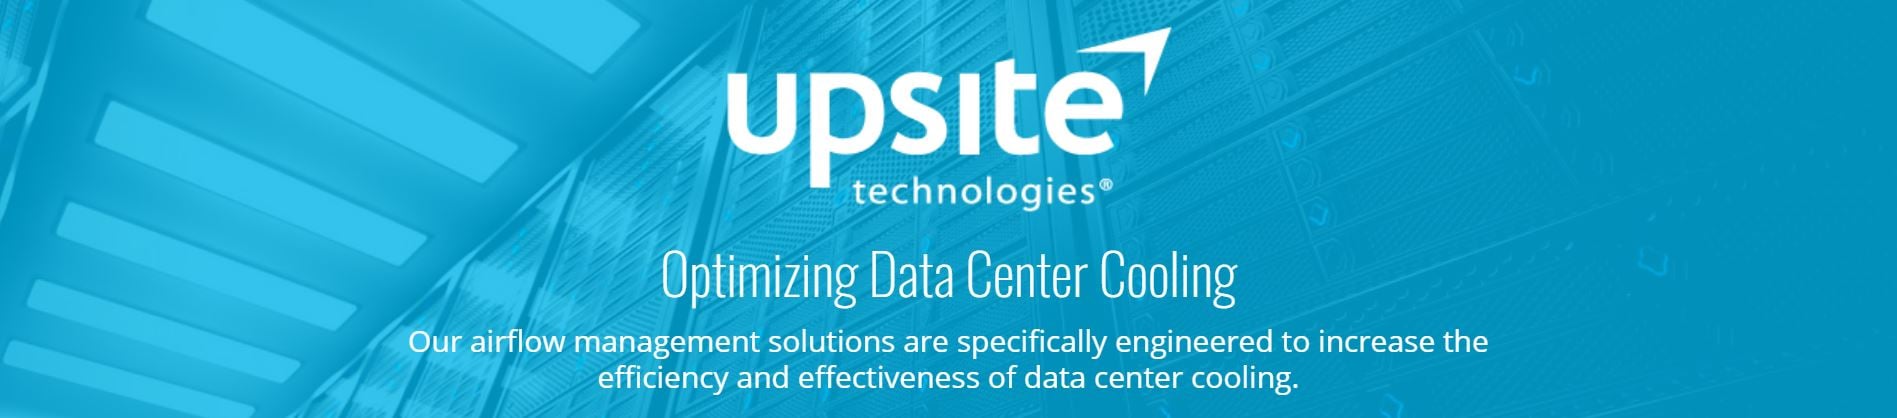 Upsite Tecnologies - Optimizing Data Center Cooling